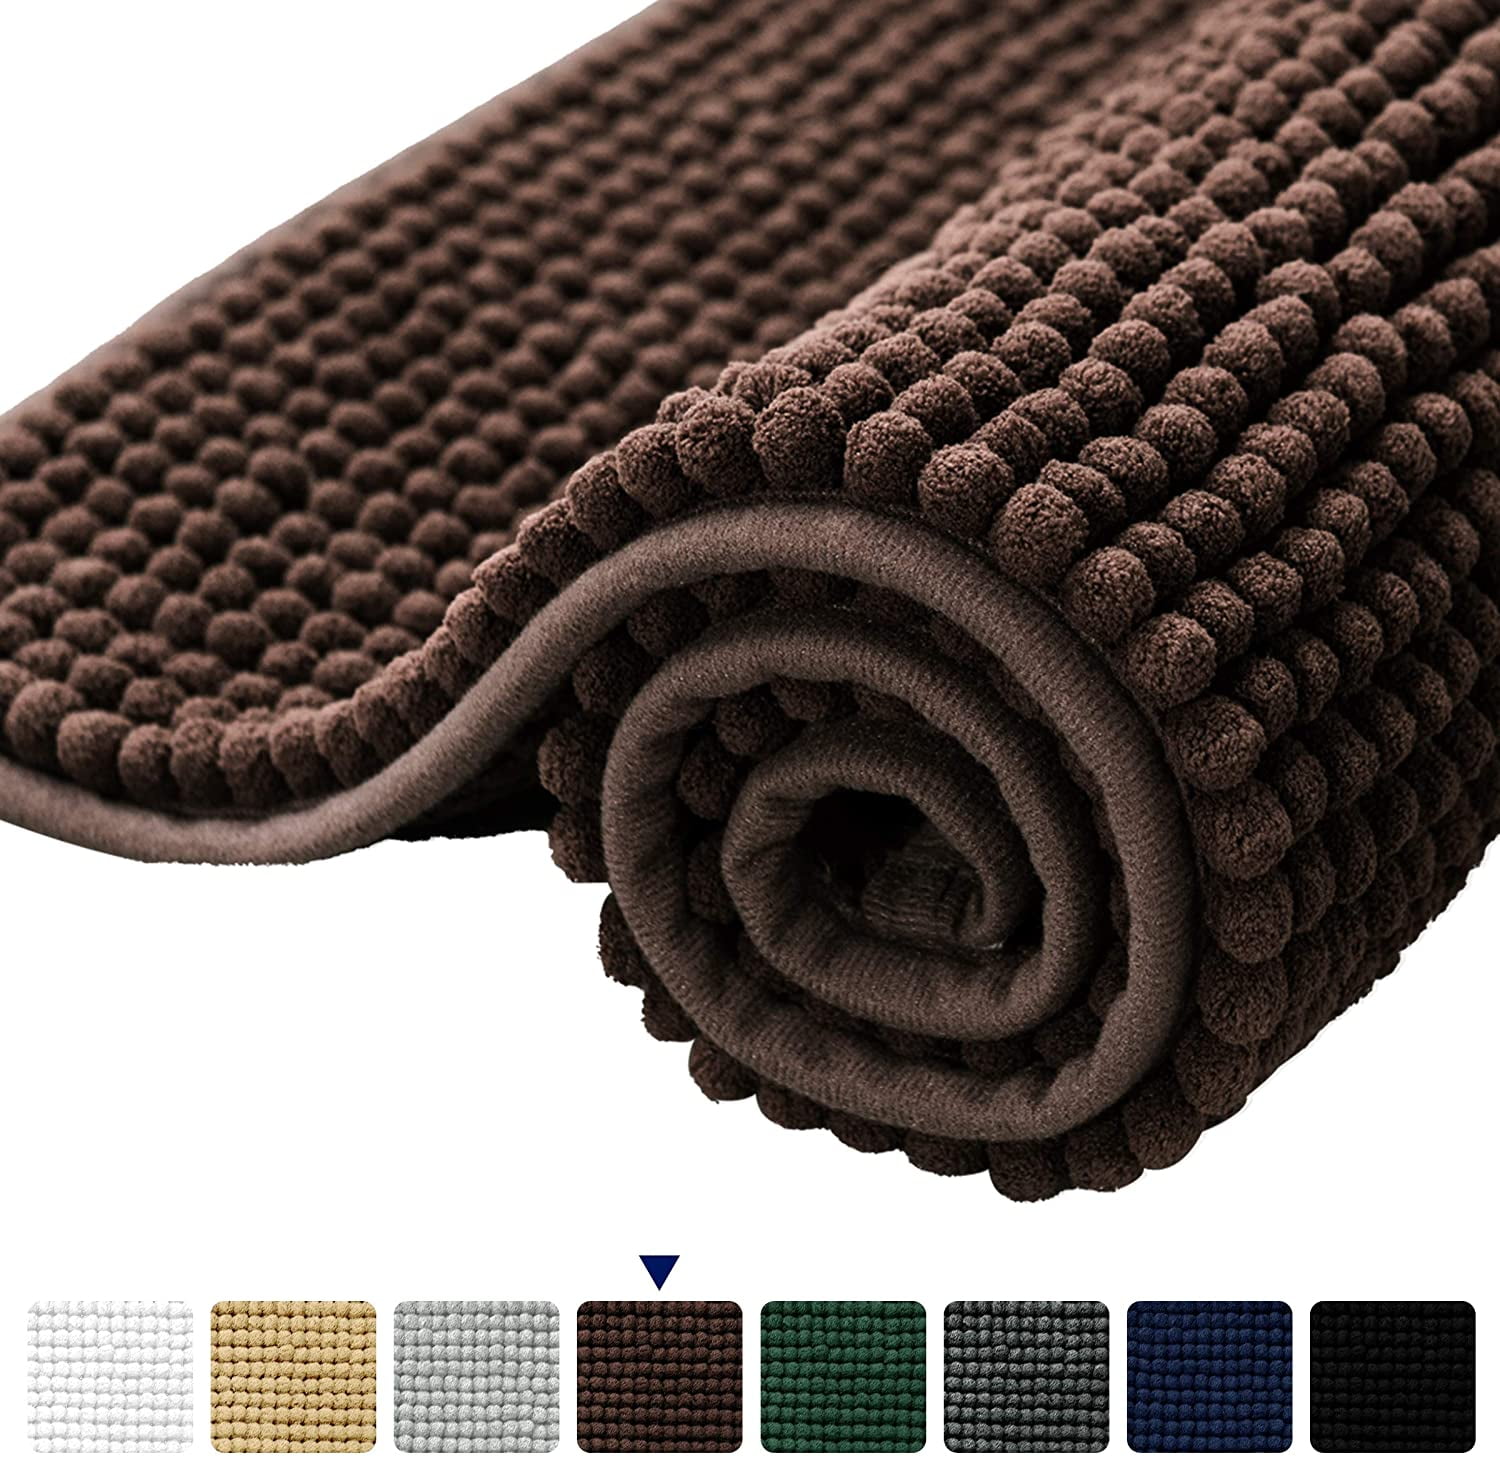 Kasentex Soft Luxury Bathroom Rug Mat, Absorbent Shaggy Chenille Bath Rugs, Durable Non-Slip Indoor / Outdoor Rugs, Size: 17” x 24”, Pink